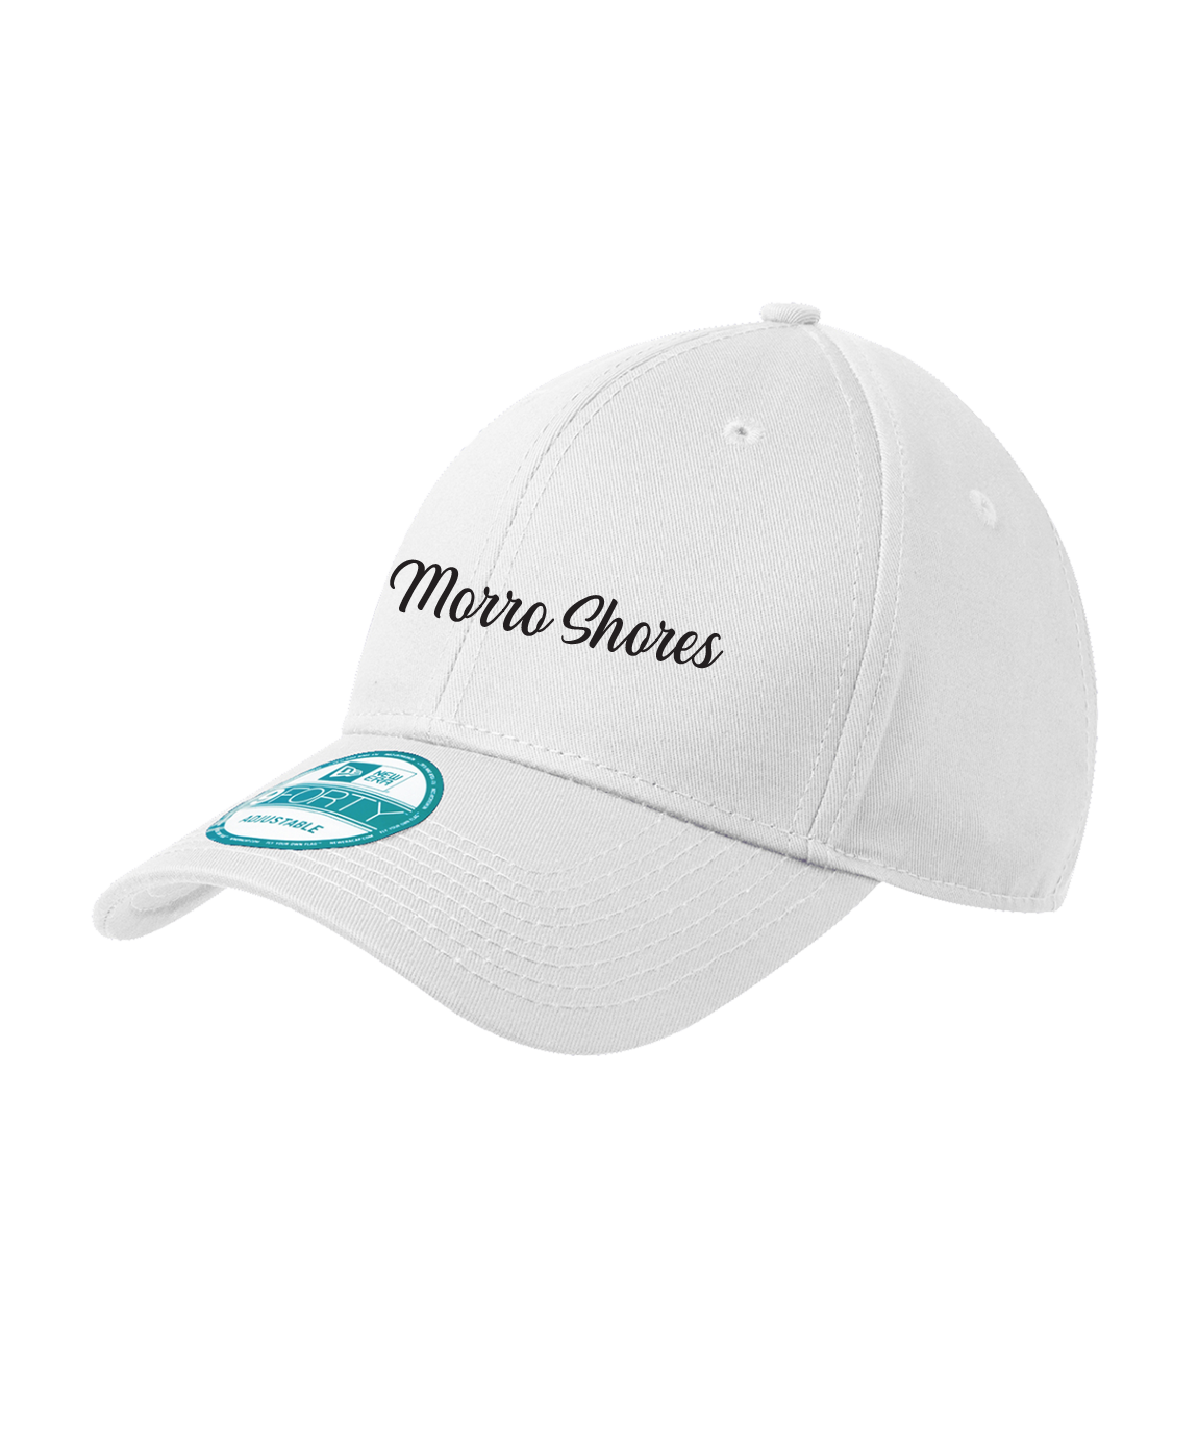 Morro Shores - New Era® - Adjustable Structured Cap